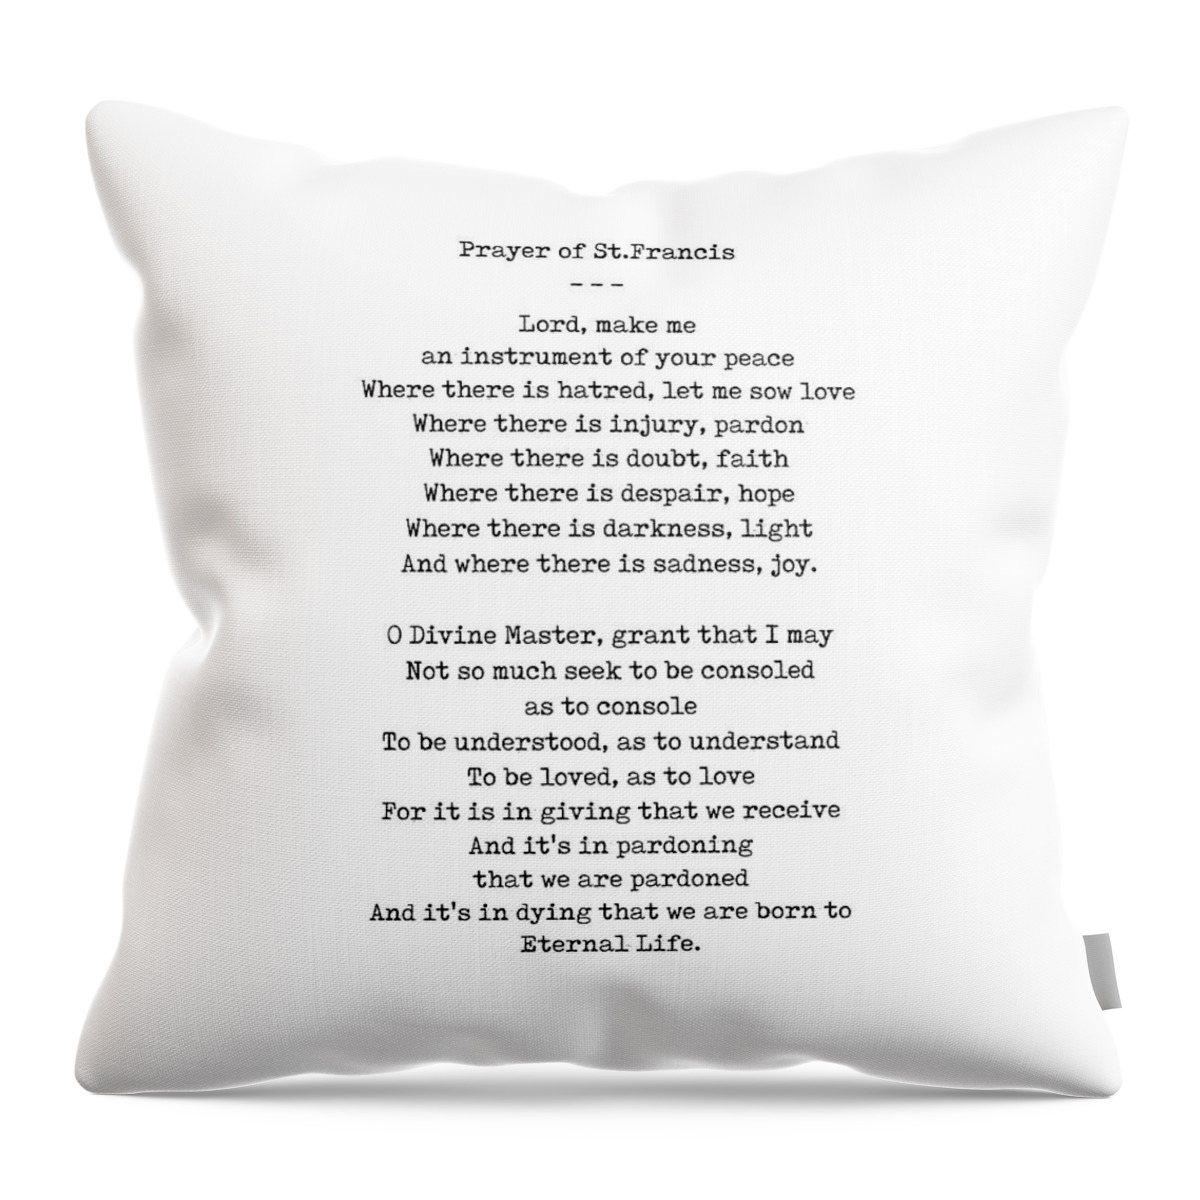 Prayer Of St Francis Throw Pillow featuring the digital art Prayer of St.Francis - An instrument of your peace - Minimal, Typewriter Print - Motivational Poem by Studio Grafiikka